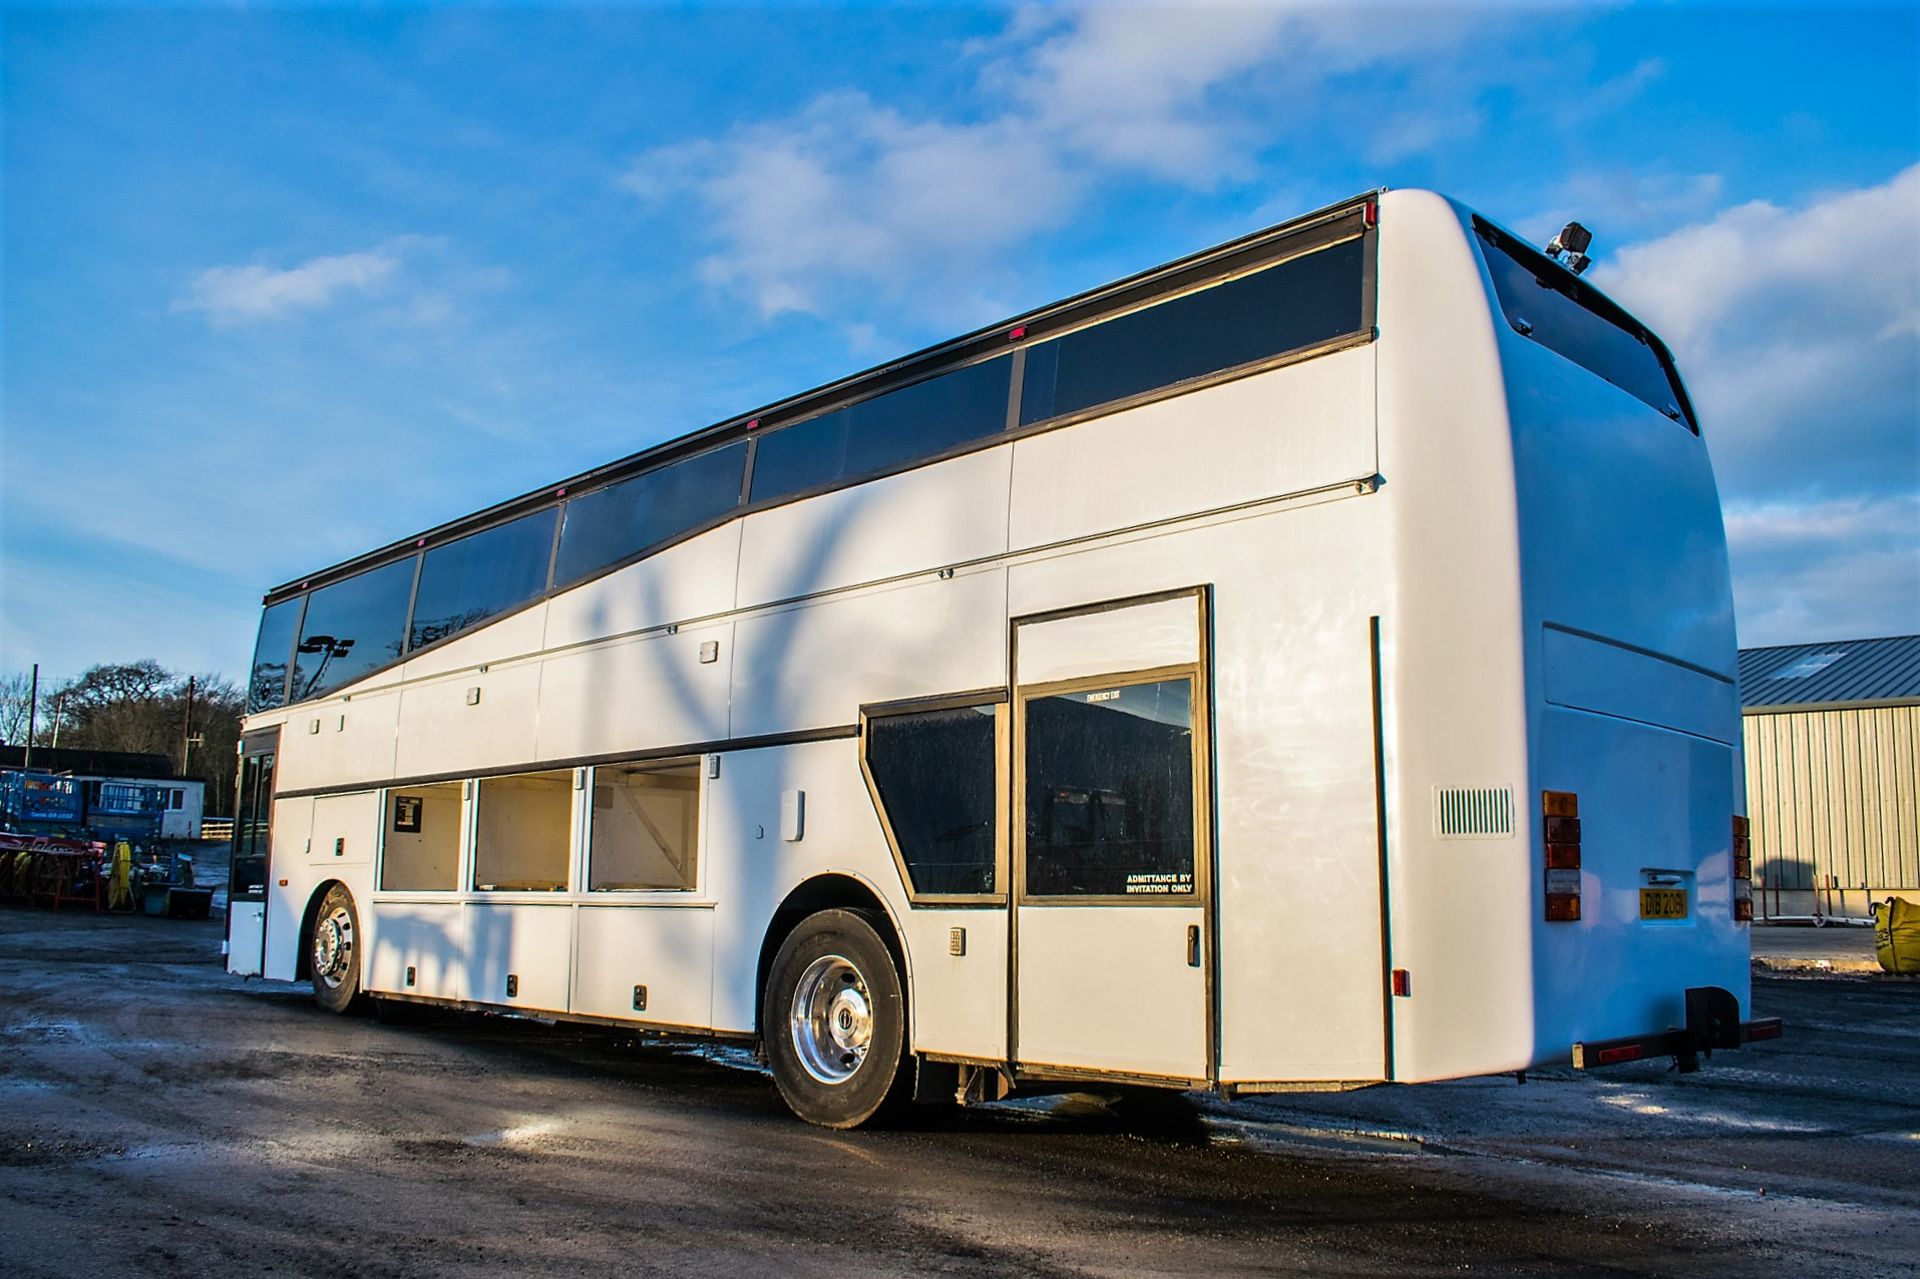 Vanhool double decker luxury tour coach Registration Number: DIB 2061 Date of Registration: 10/06/ - Image 4 of 24